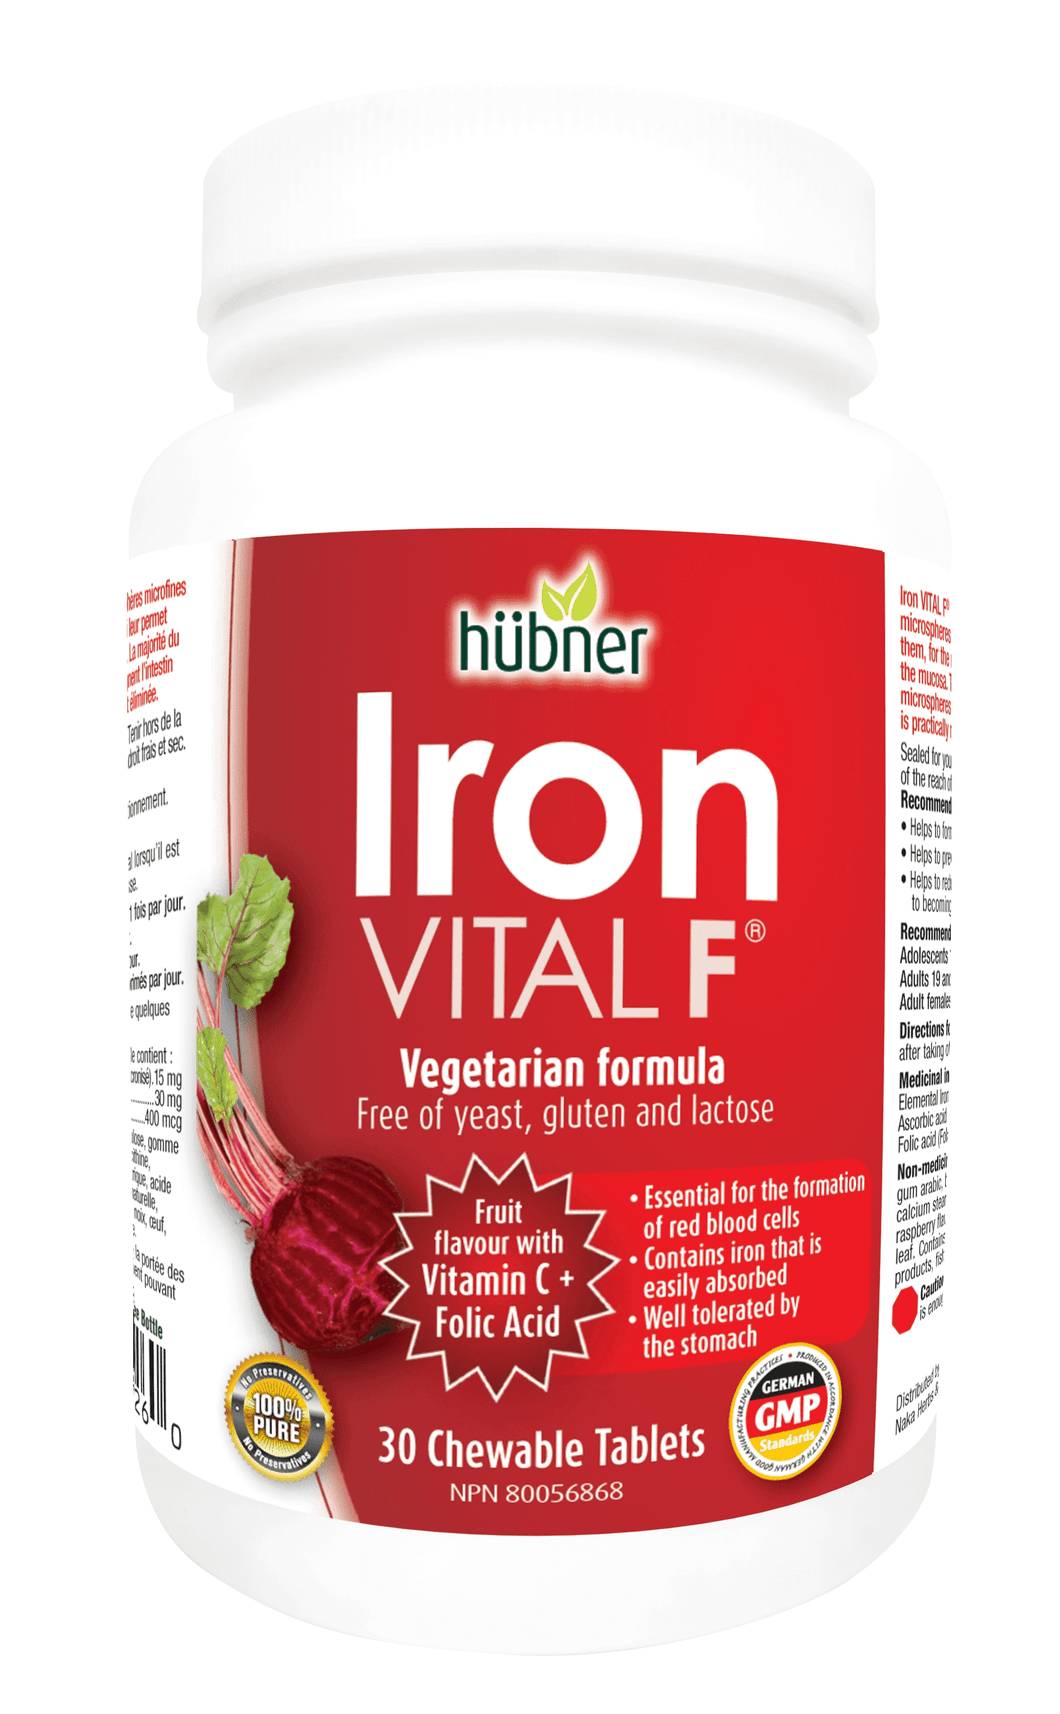 Hubner - Iron Vital (30 Chewable Tabs)